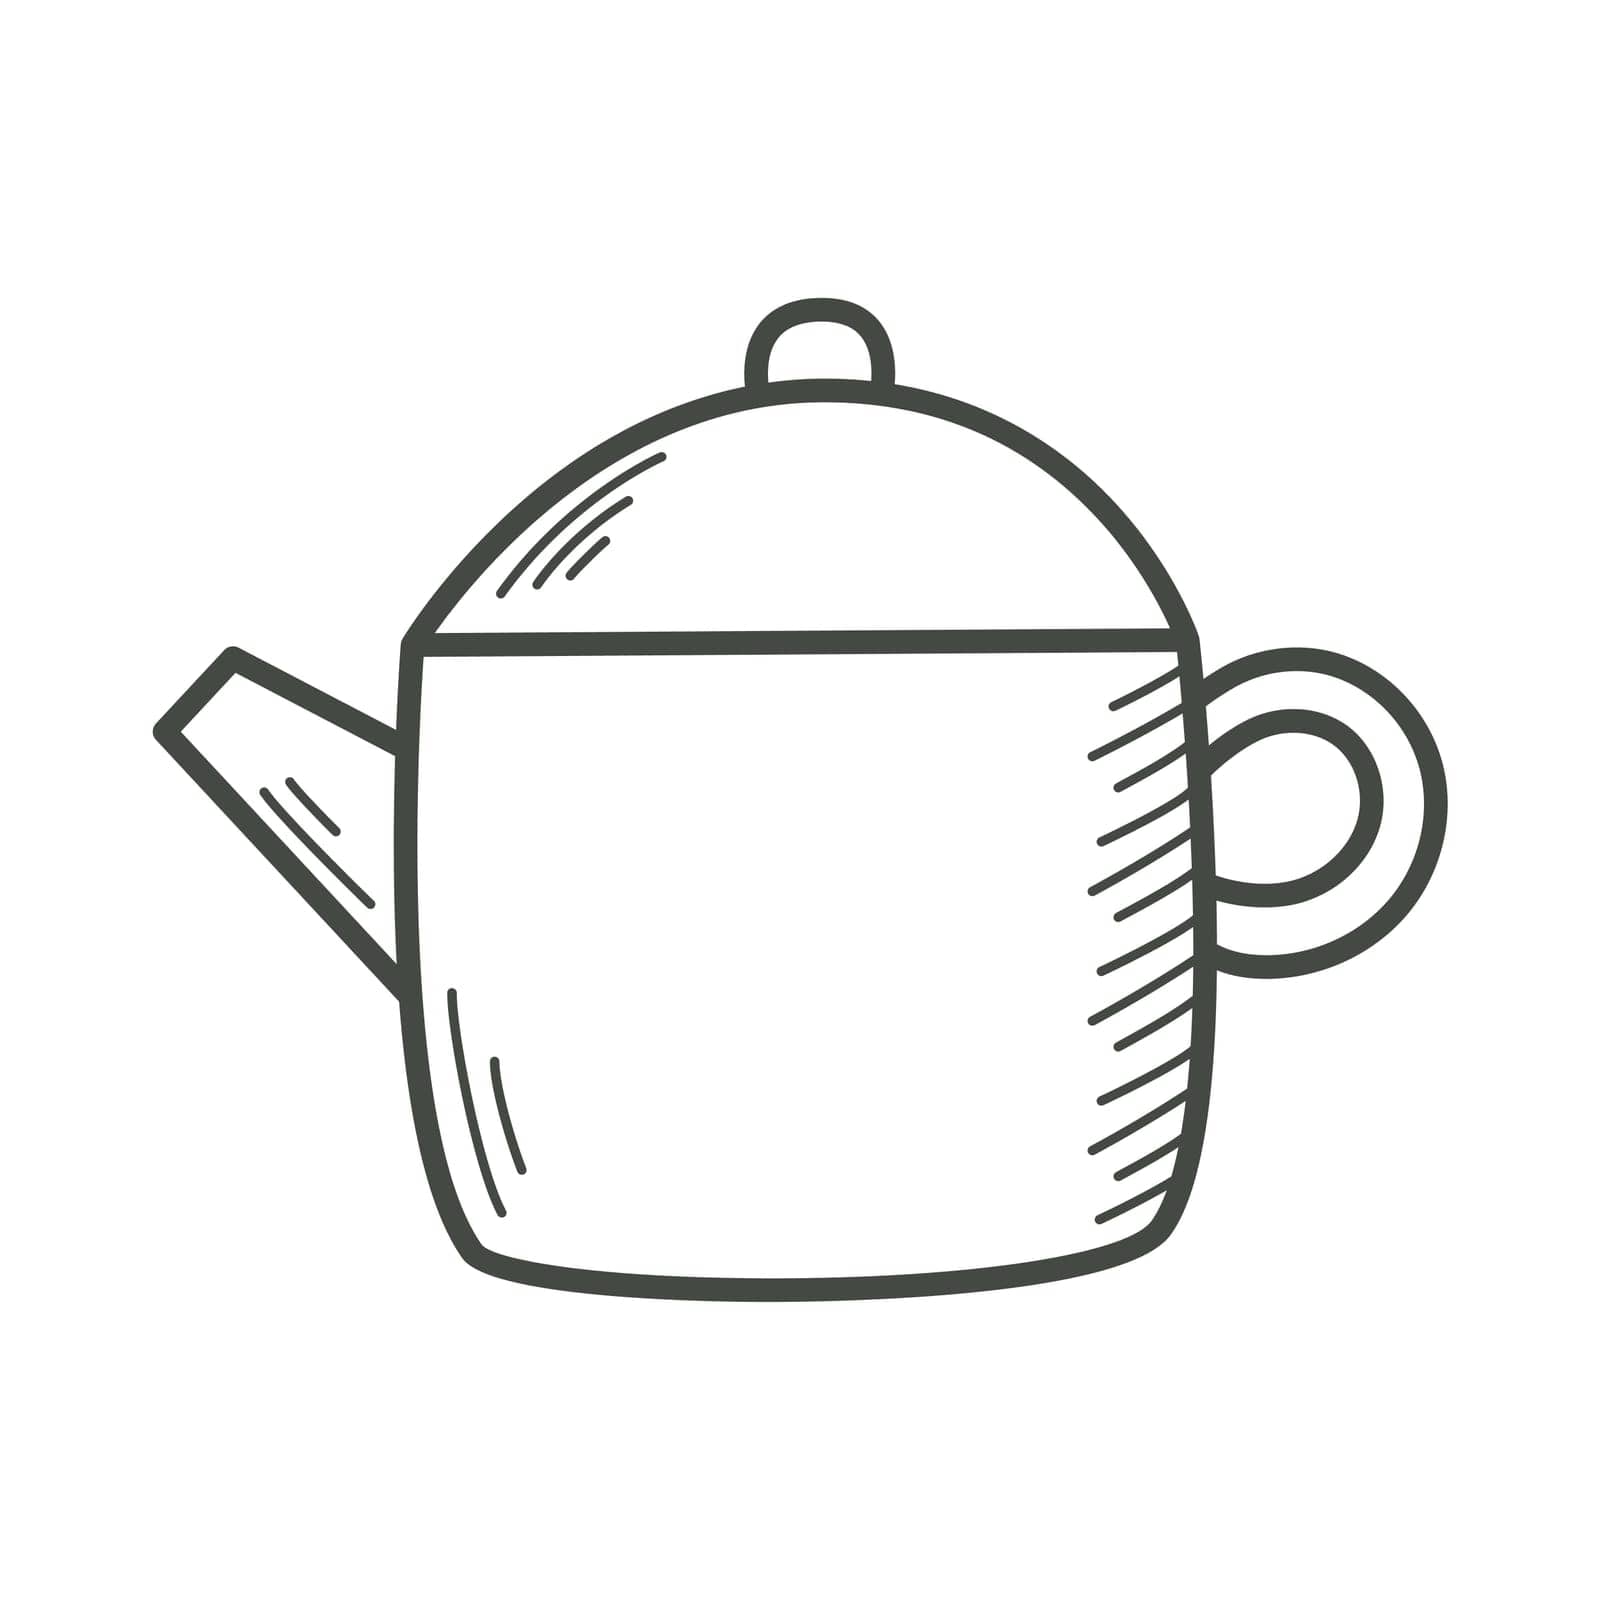 Glass teapot doodle sketch style clip art by TassiaK